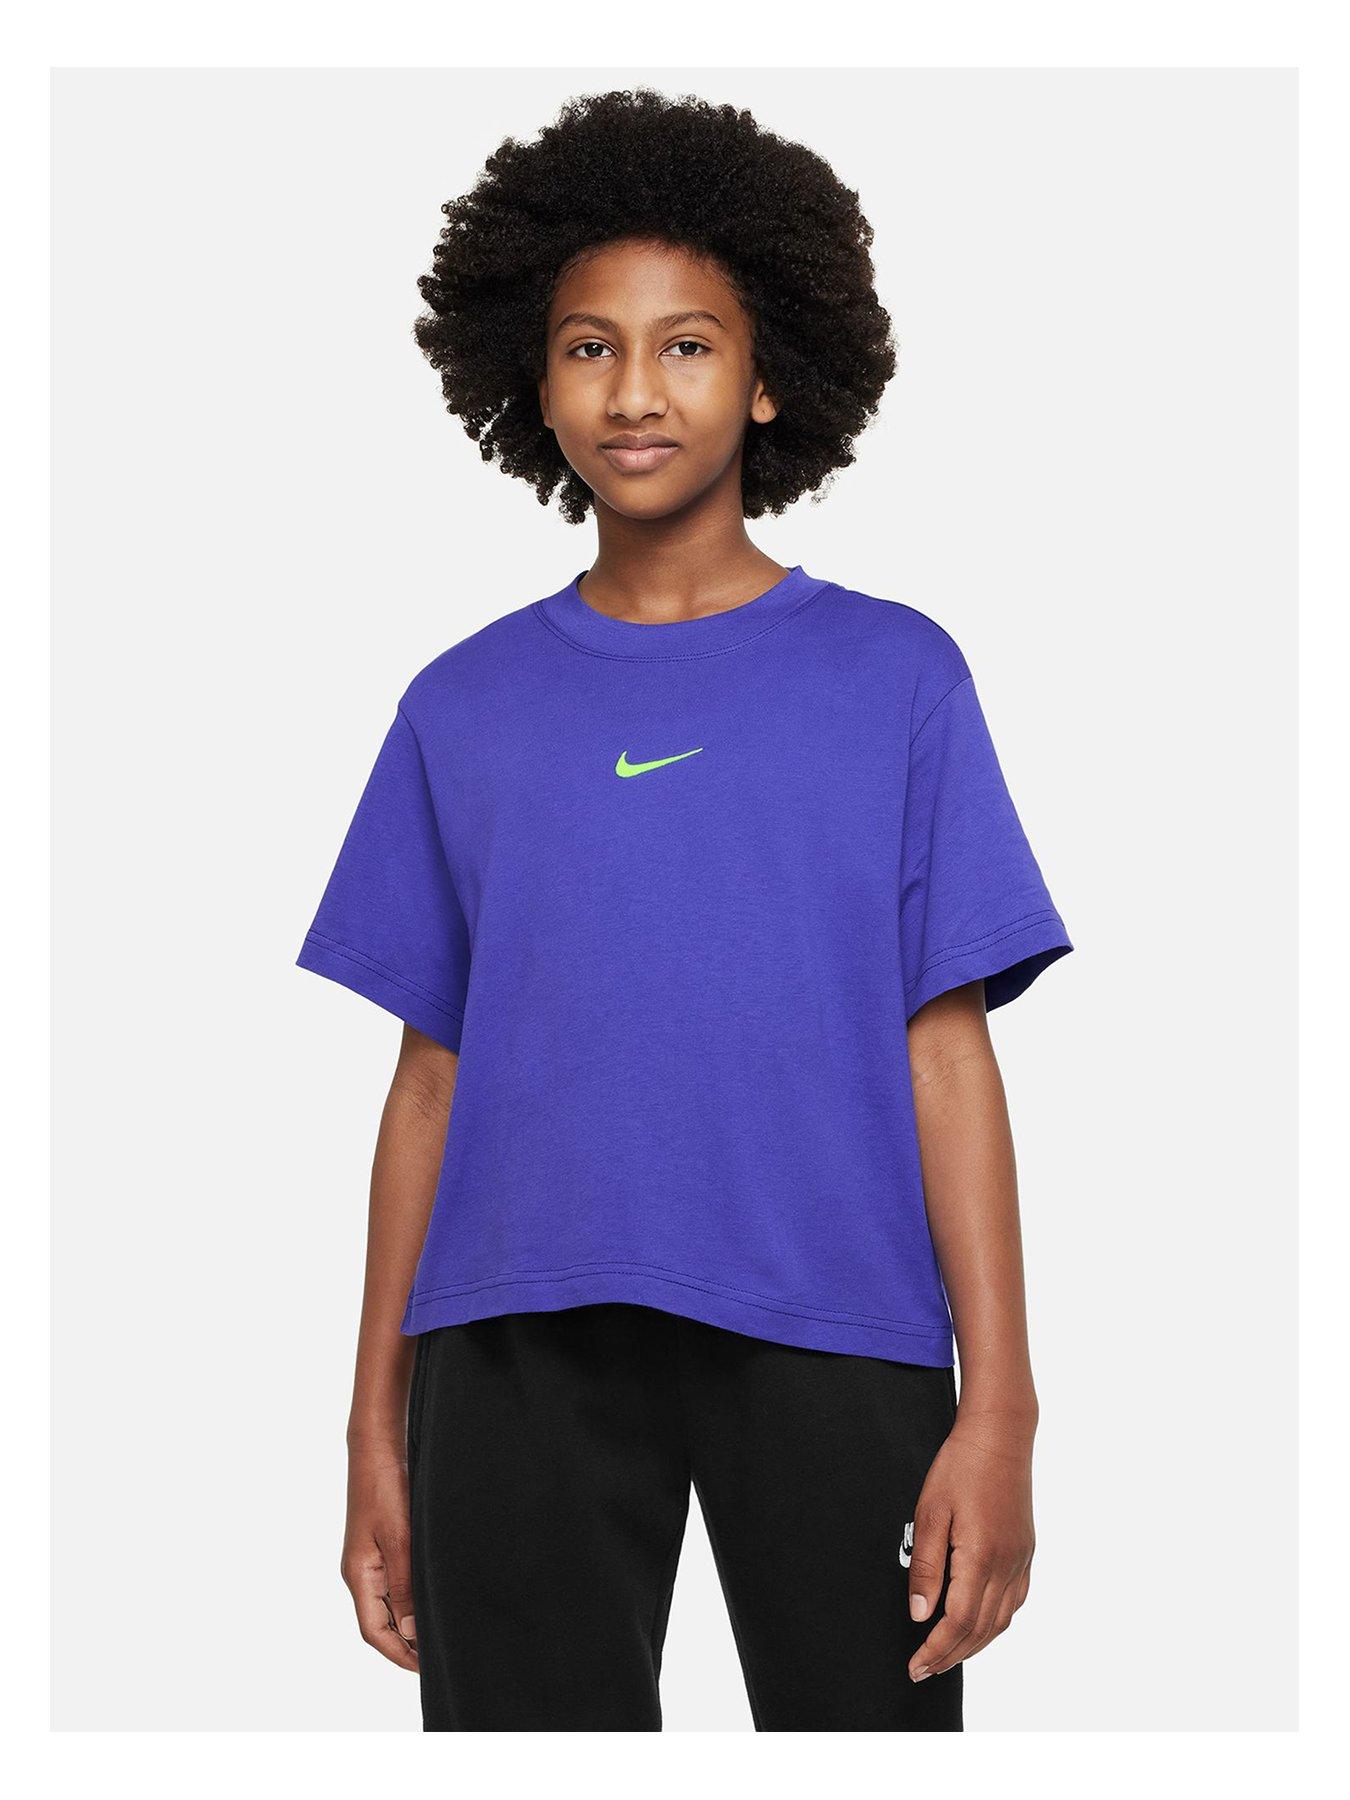 Runfit T-shirt WOMEN FASHION Shirts & T-shirts Sports discount 72% Black XL 